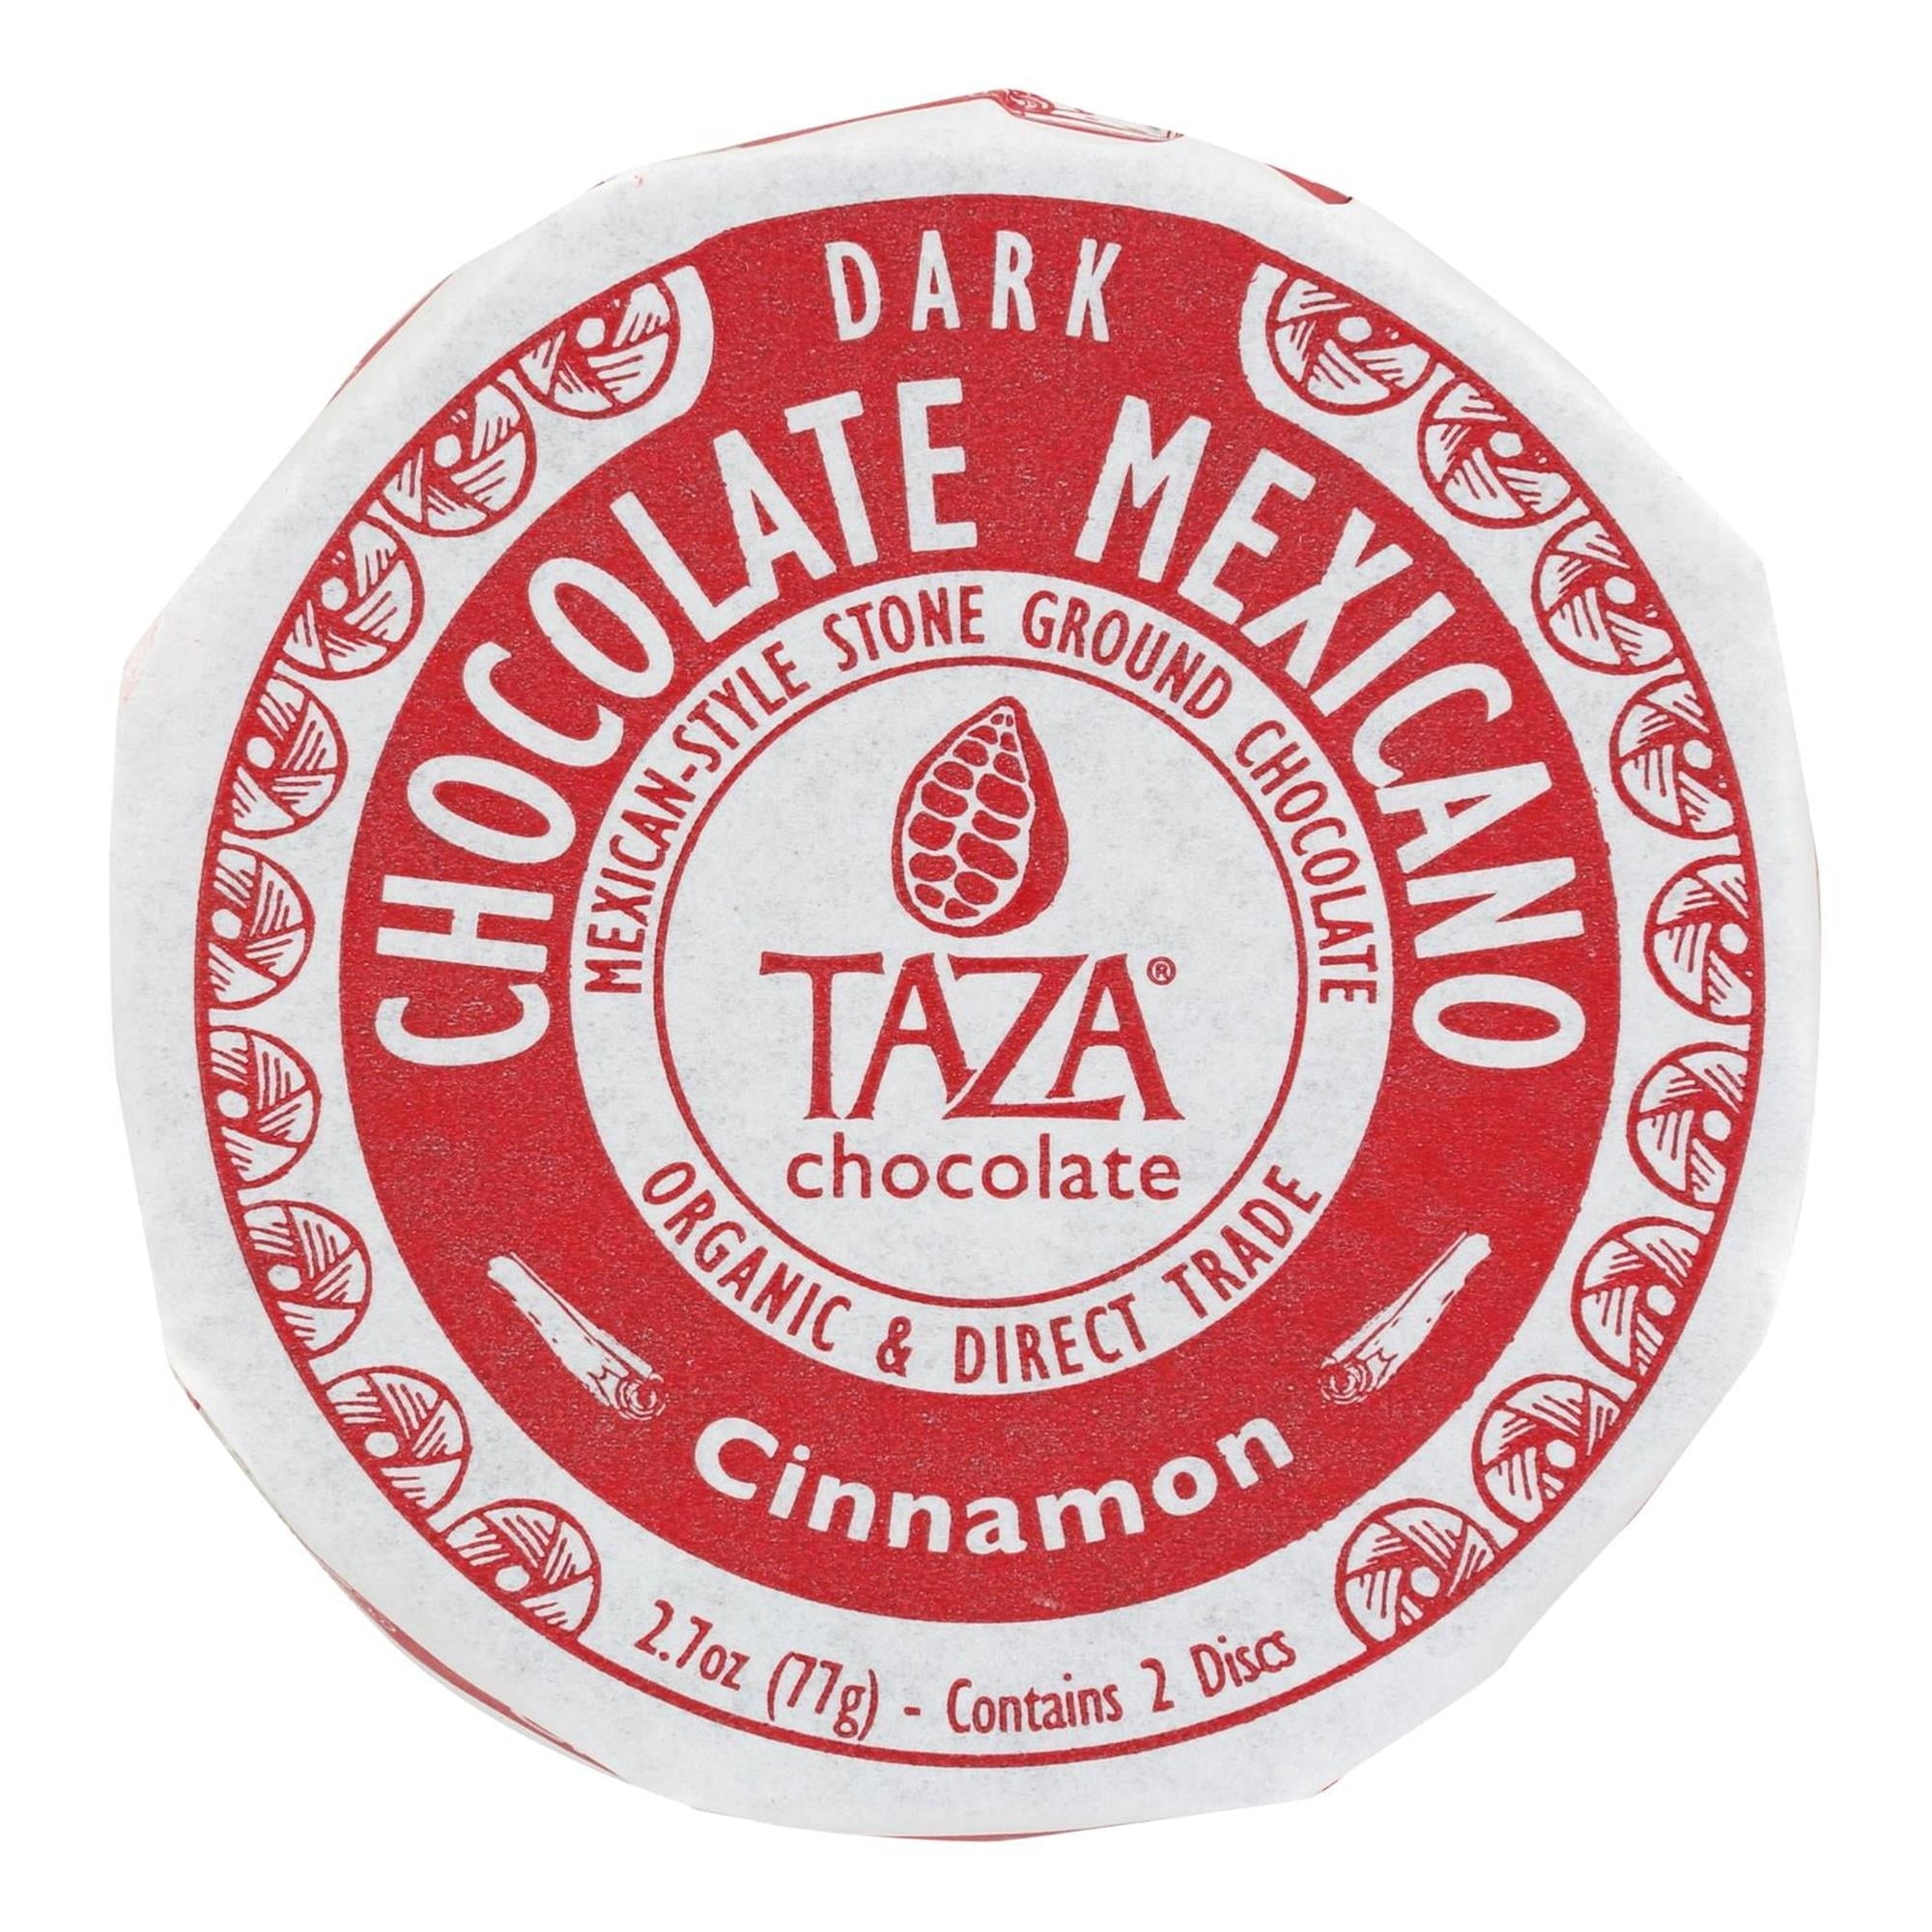 Taza Chocolate Organic Chocolate Disc Cinnamon 2.7 Oz